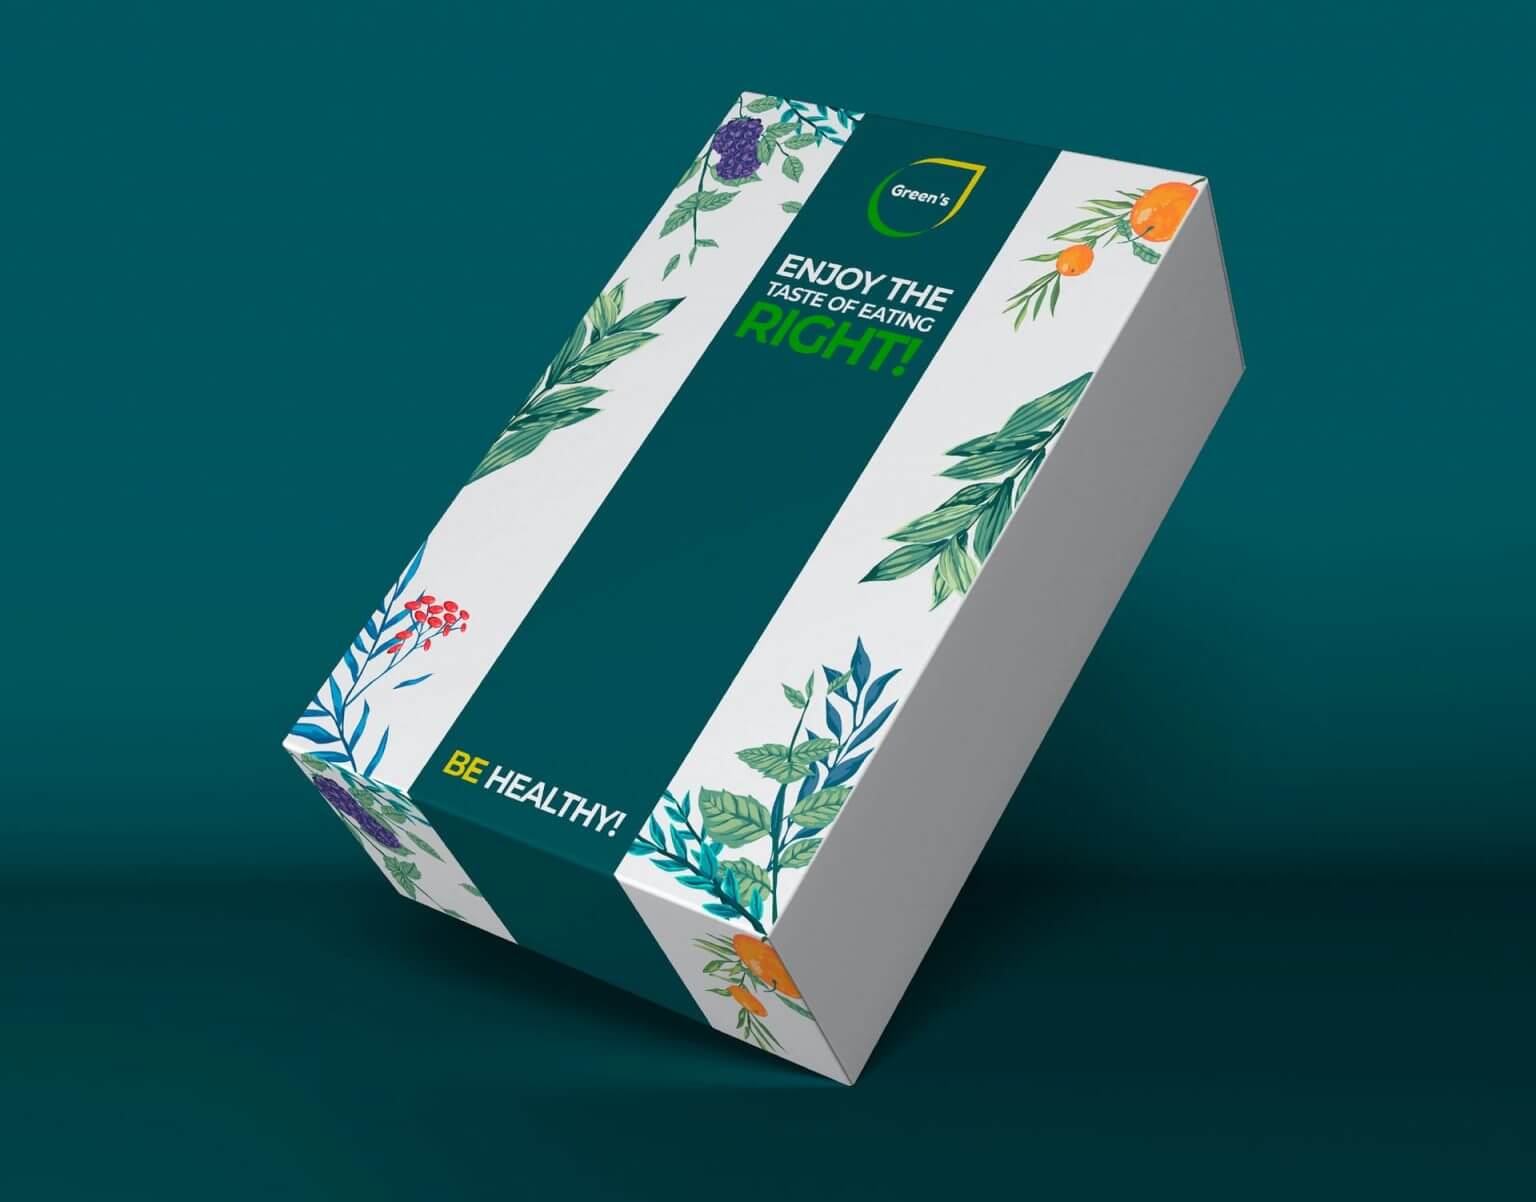 Greens Packaging Box